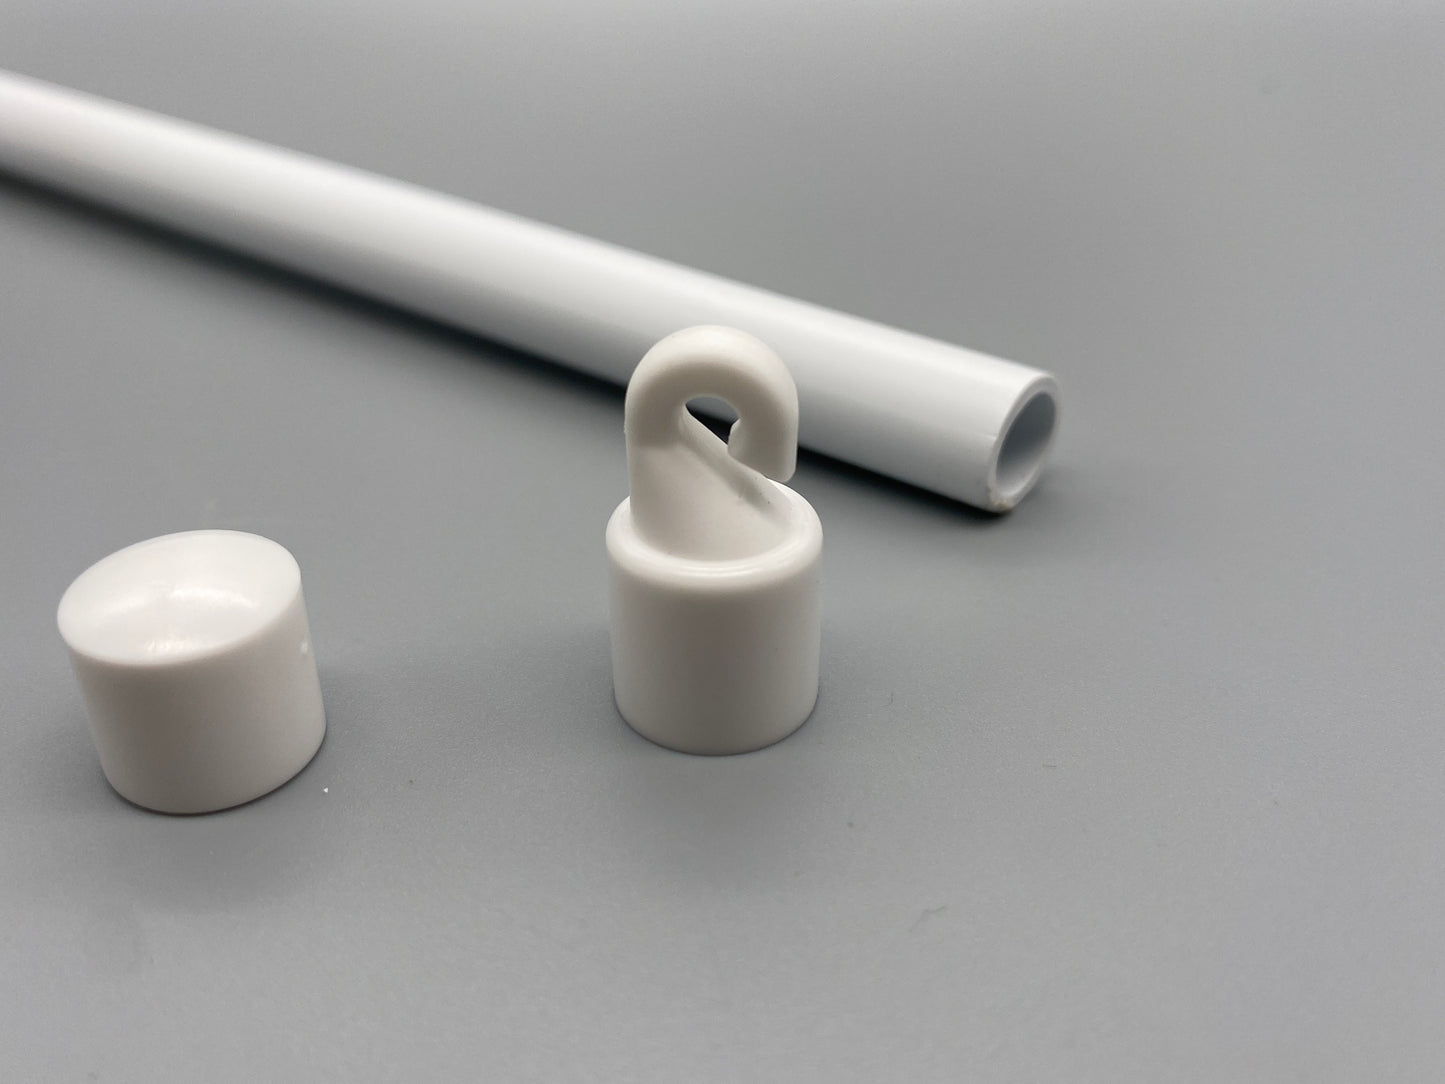 Tilting Wand Set for Vertical Blinds (400mm + Hook + Button) - White Plastic